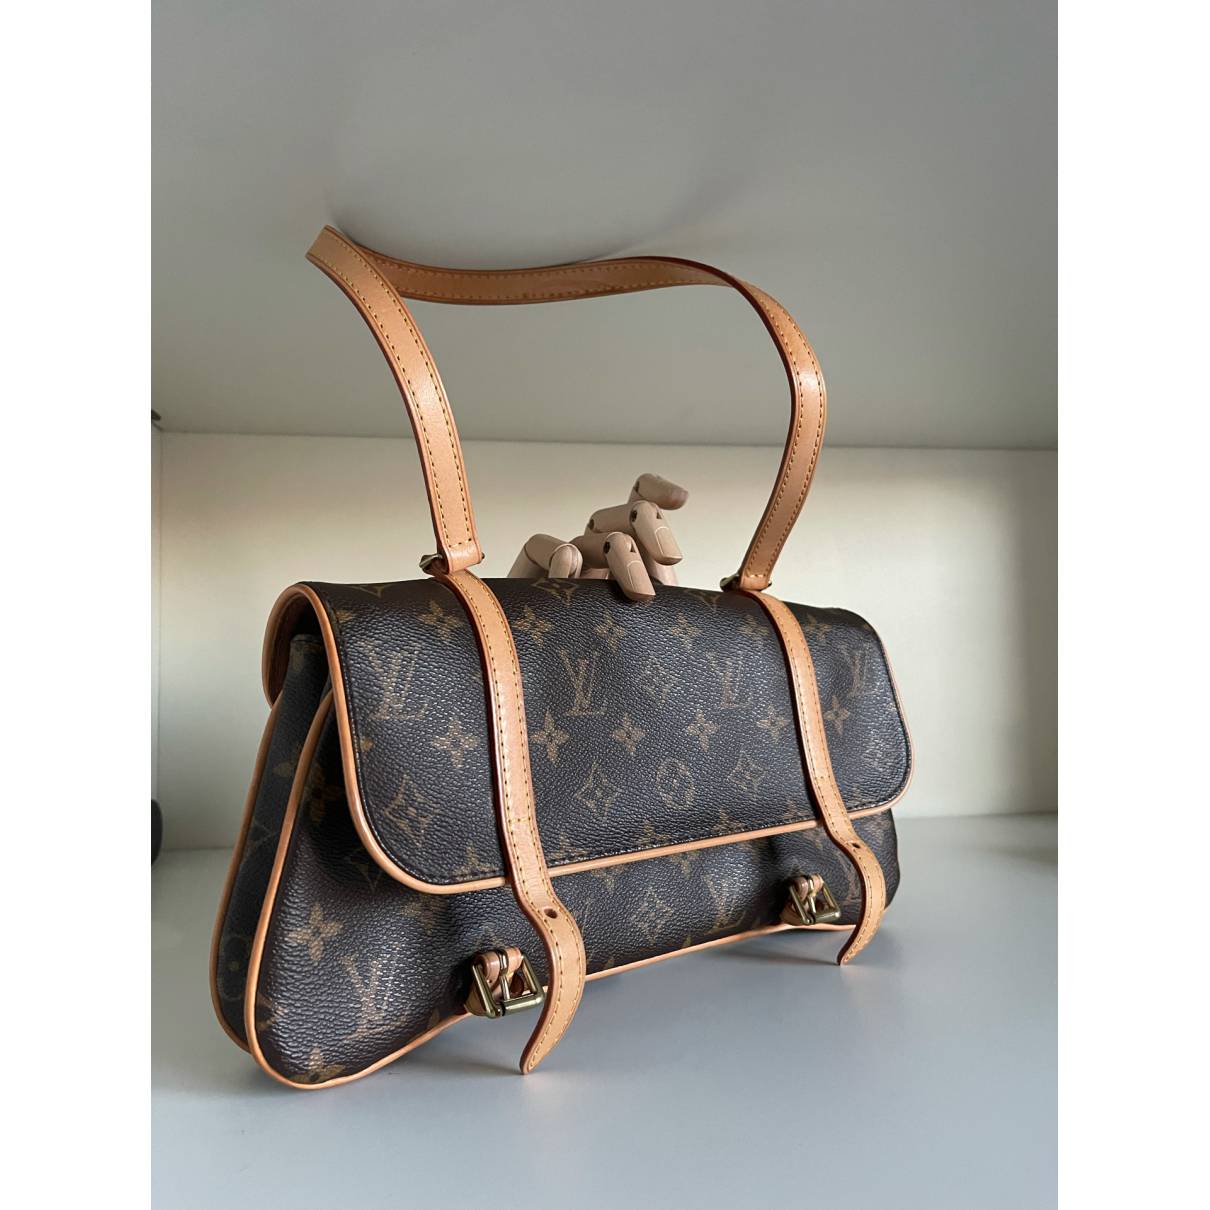 Louis Vuitton Marelle Leather Handbag